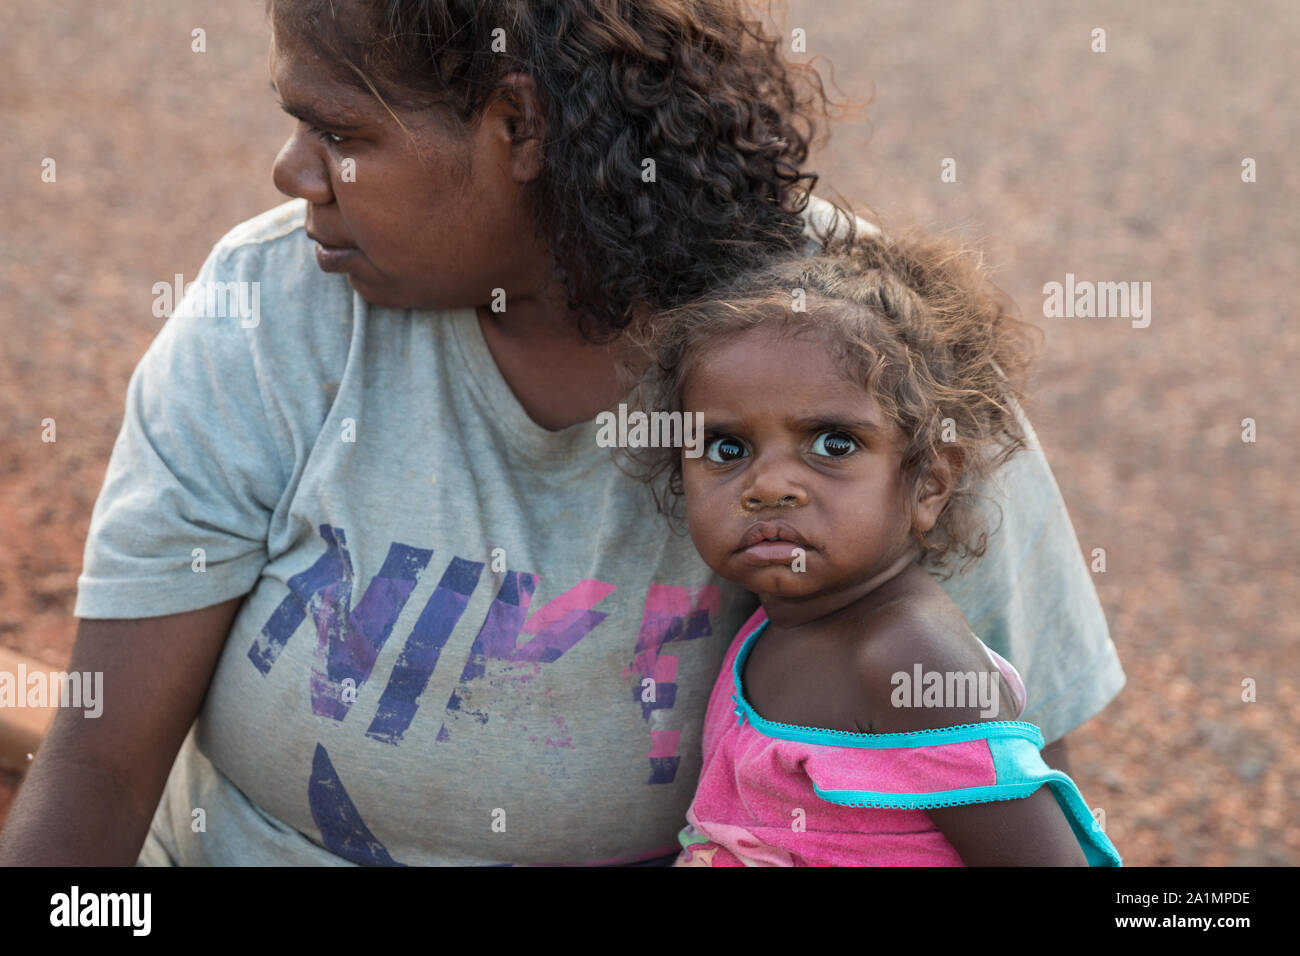 Aboriginal mother and child, Australia Stock Photo